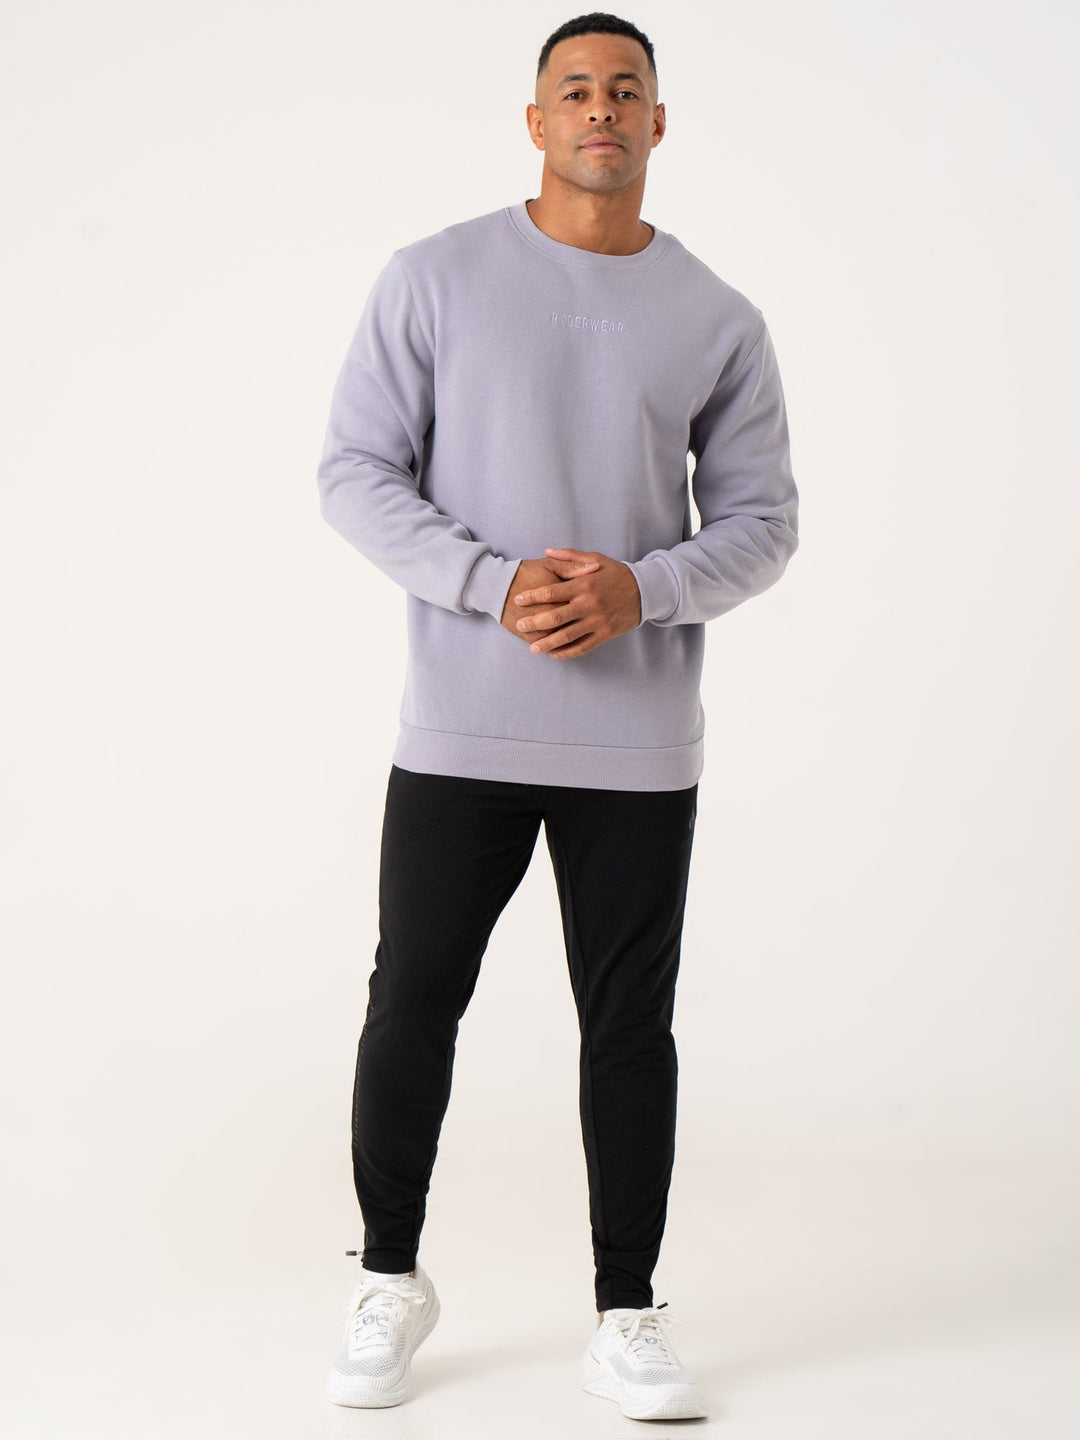 Pursuit Pullover - Lavender Clothing Ryderwear 